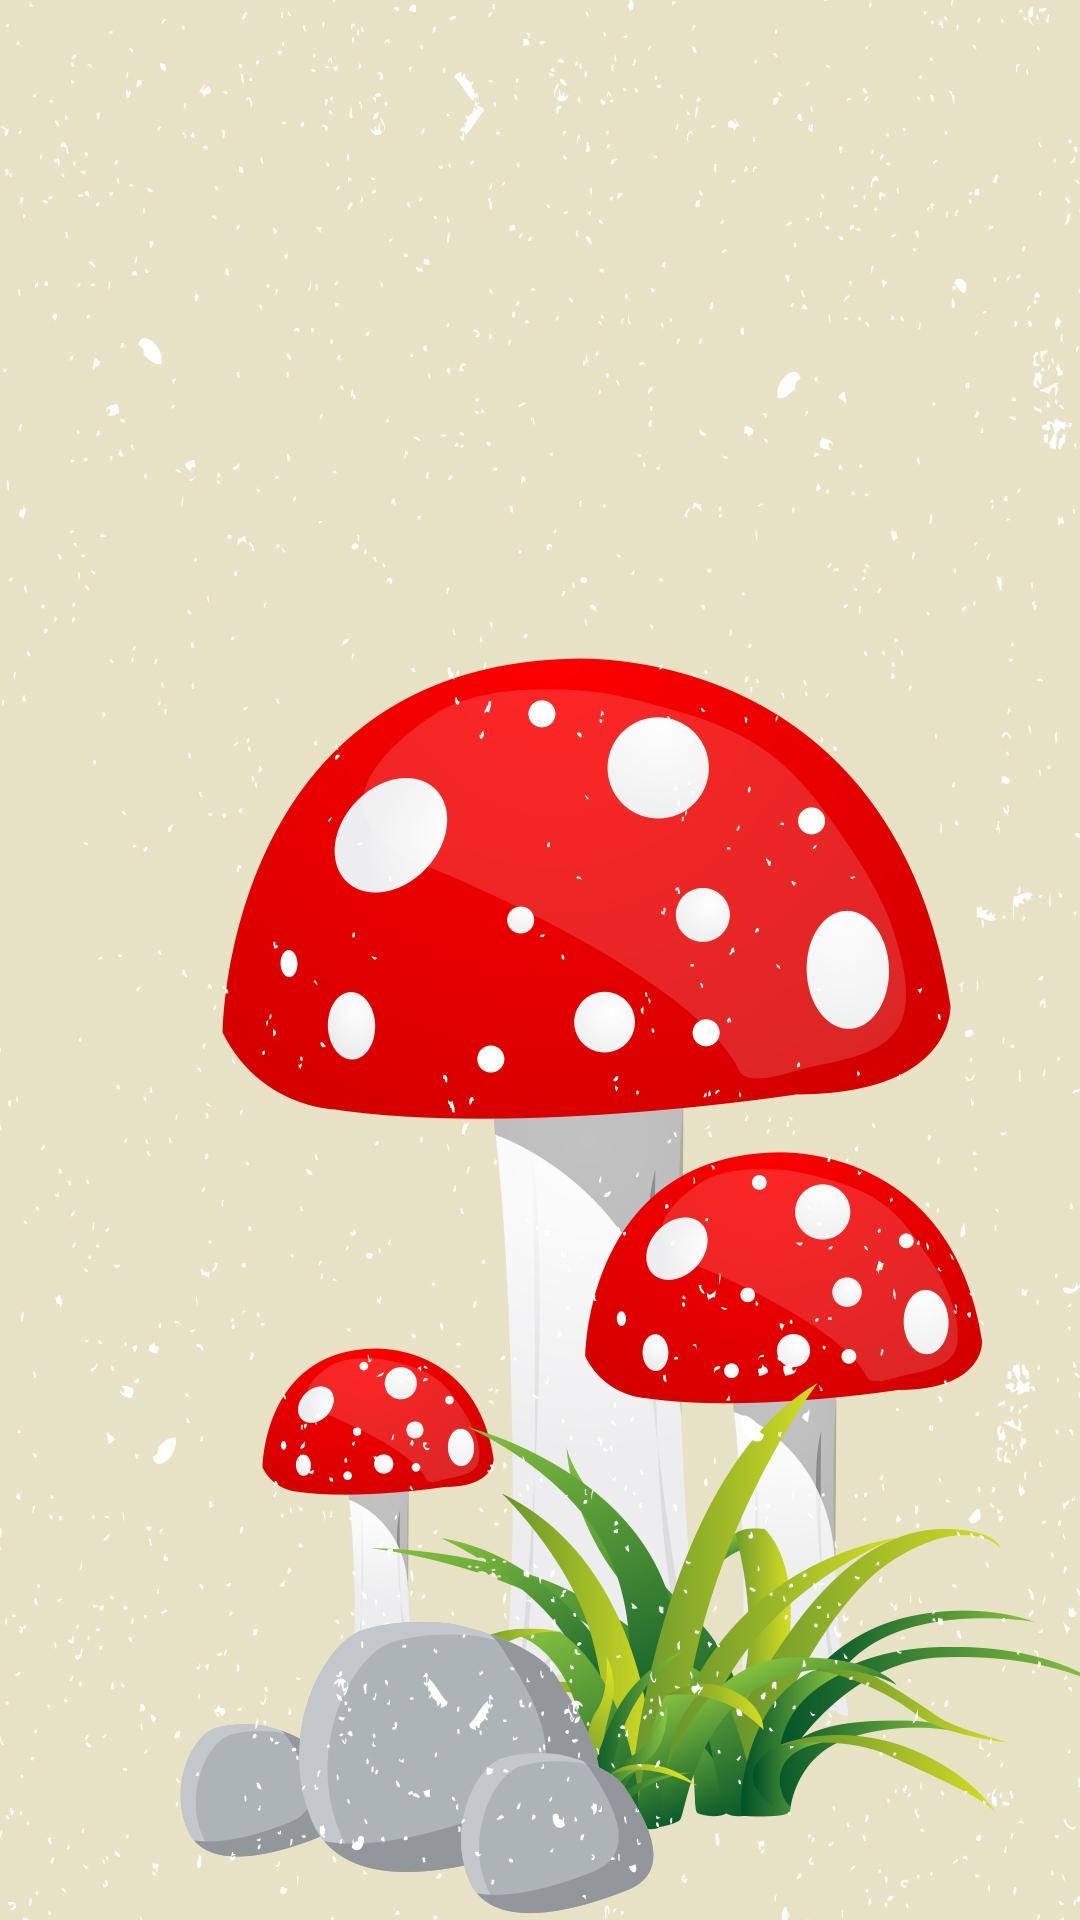 Cute Magic Mushroom APUS Live Wallpaper for Android